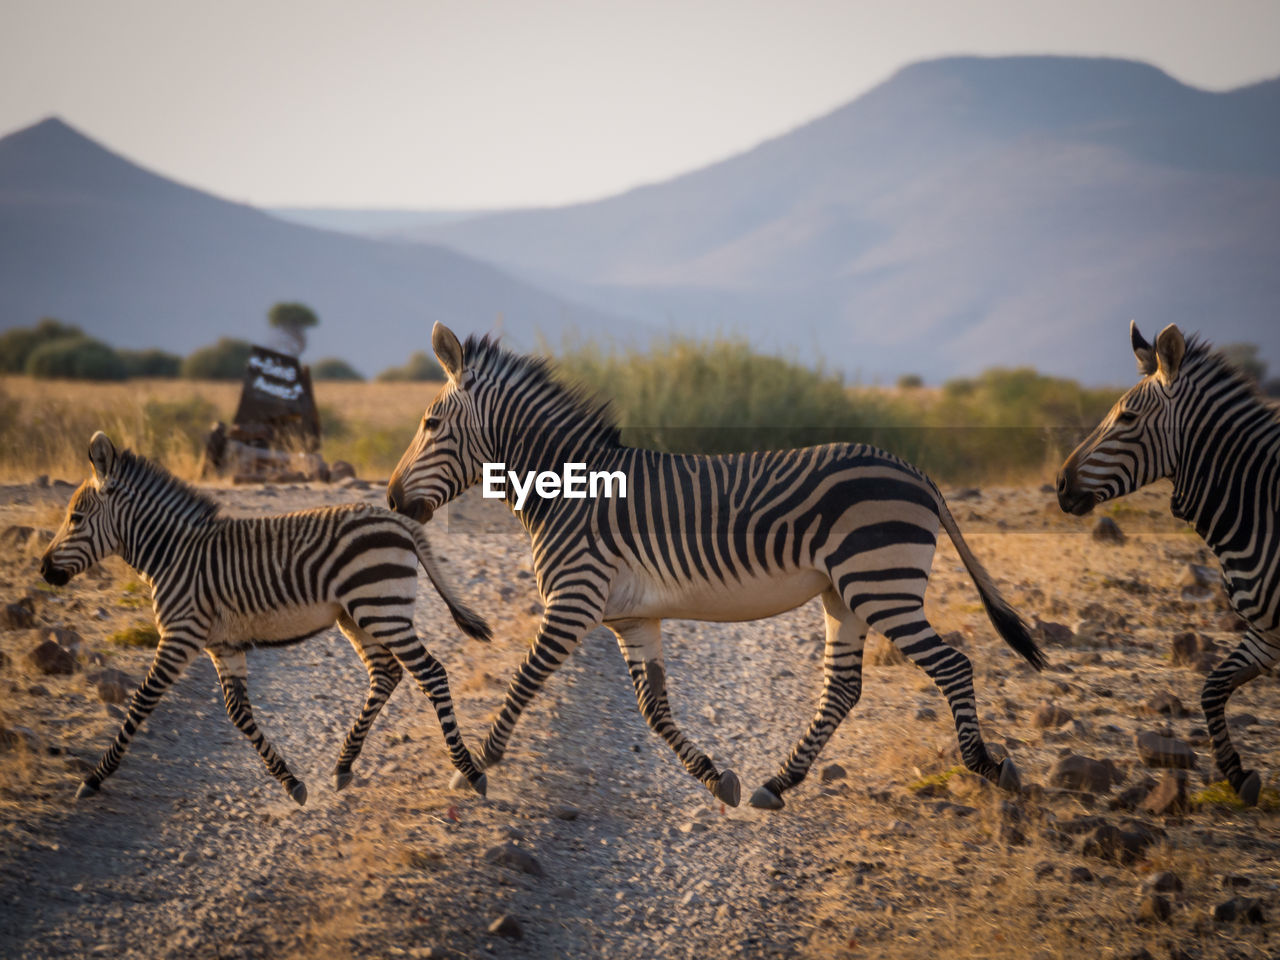 Zebras crossing dirt track in namibia